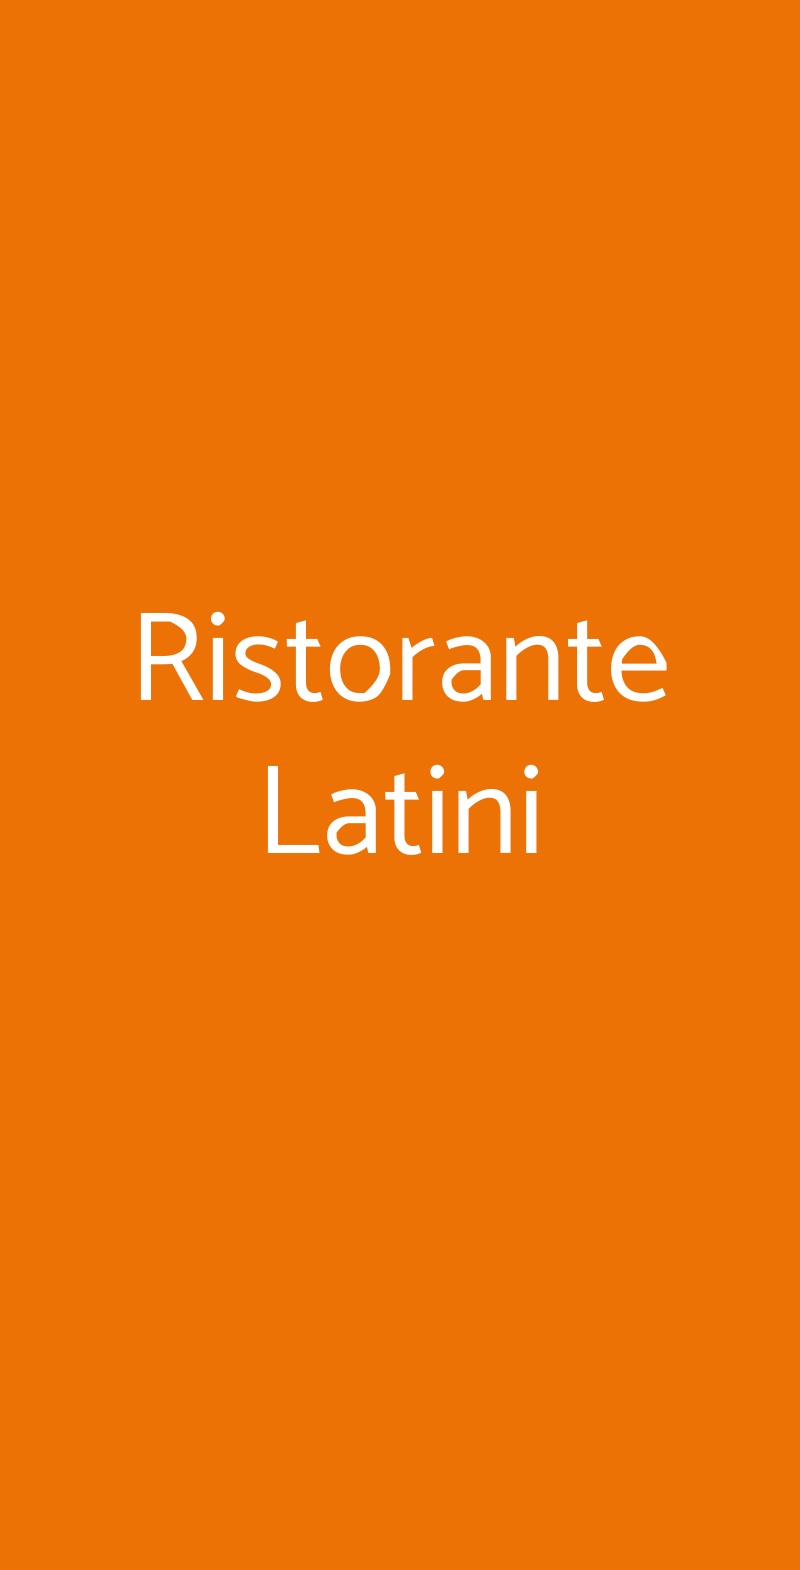 Ristorante Latini San Gimignano menù 1 pagina